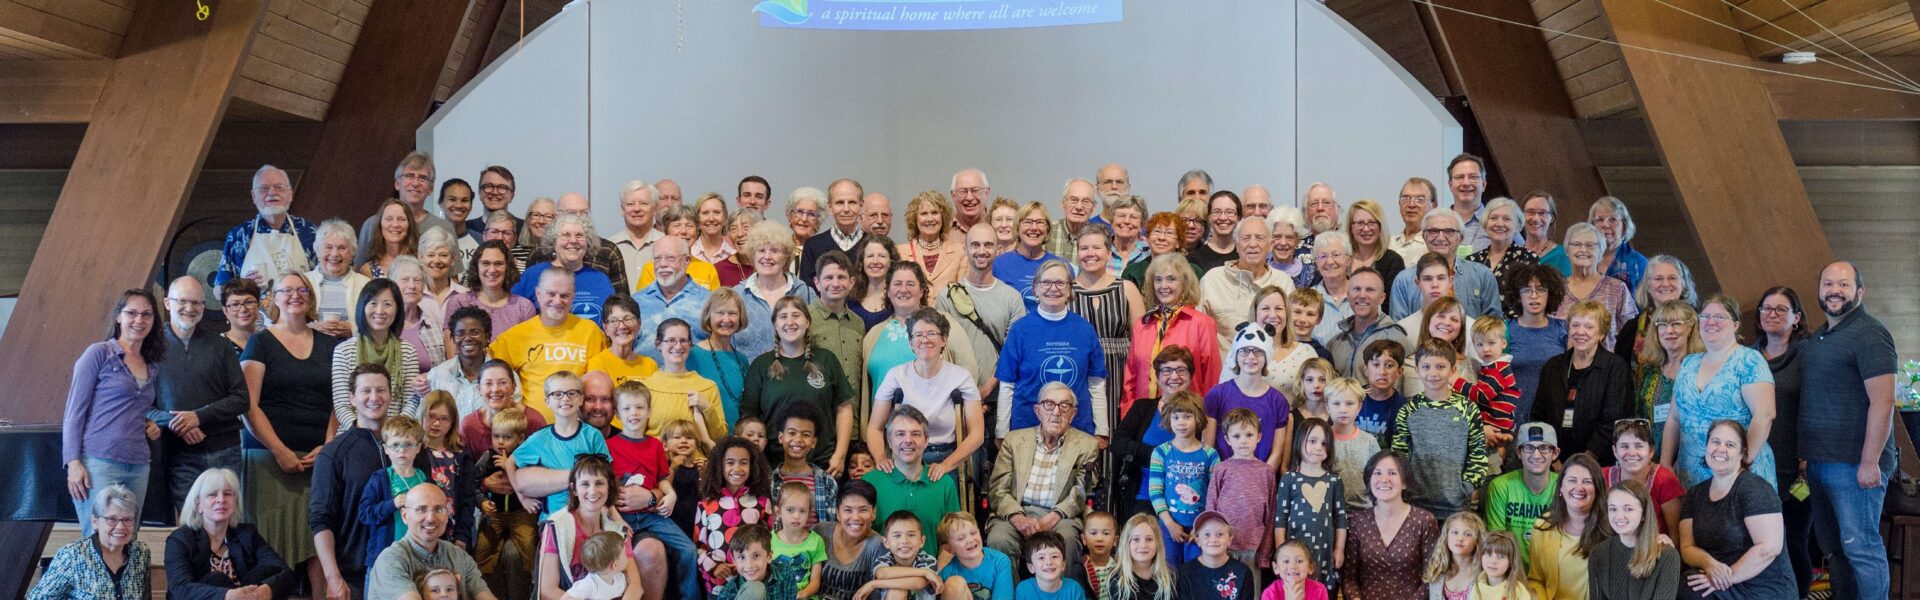 Northlake Unitarian Universalist Church | Kirkland, Washington